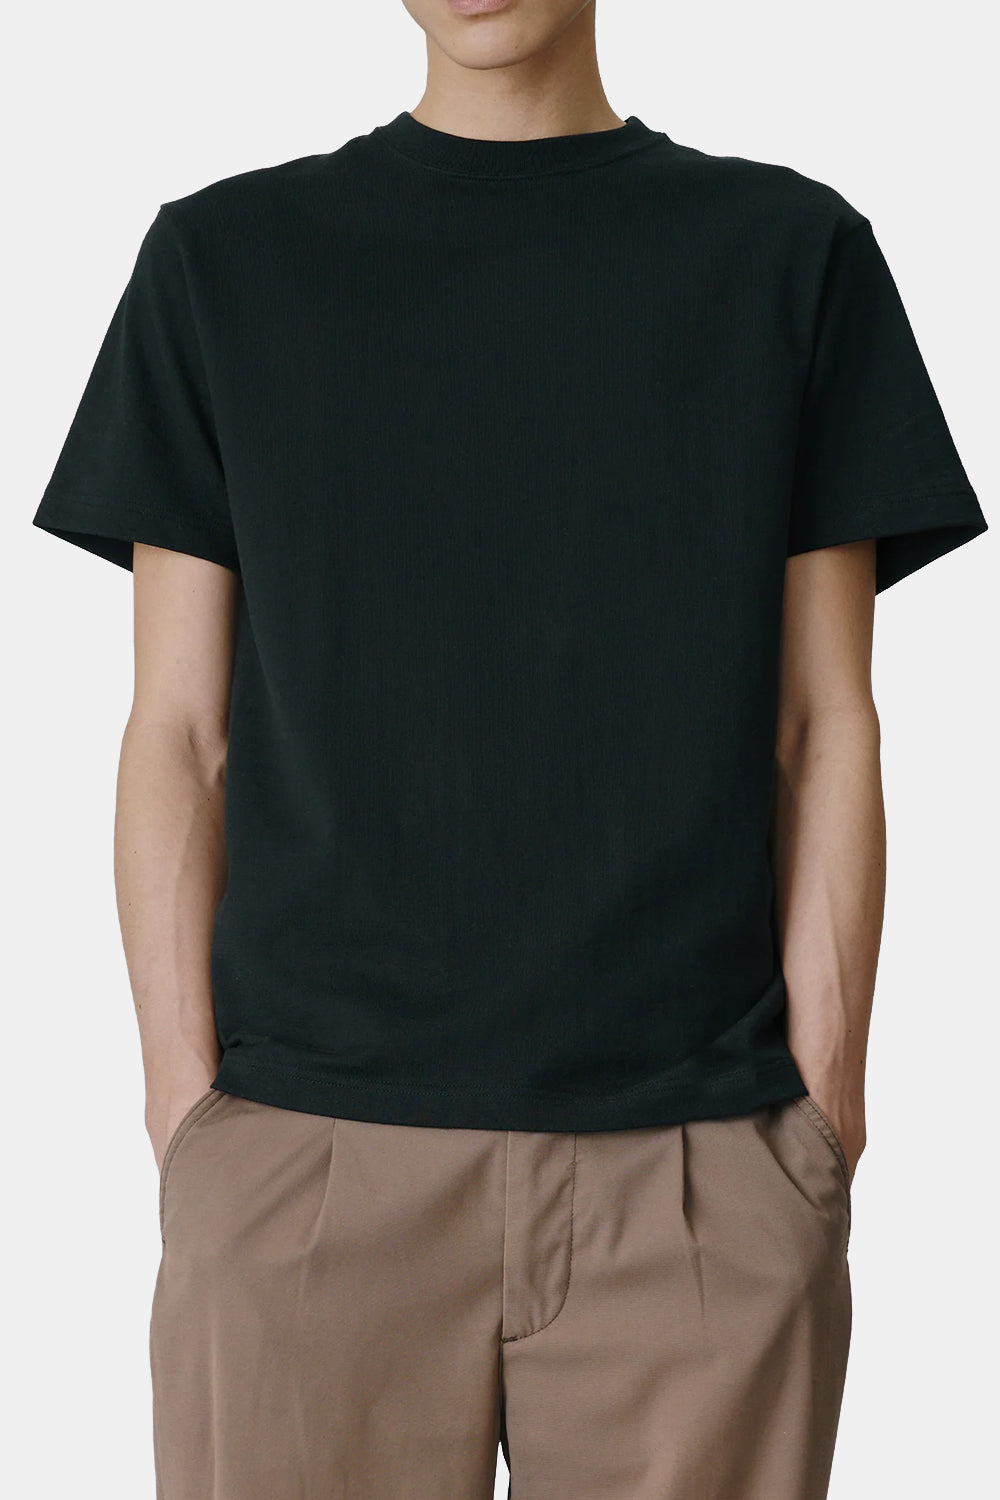 United Athle Japan Made Standard Fit Short Sleeve T-shirt (Black)